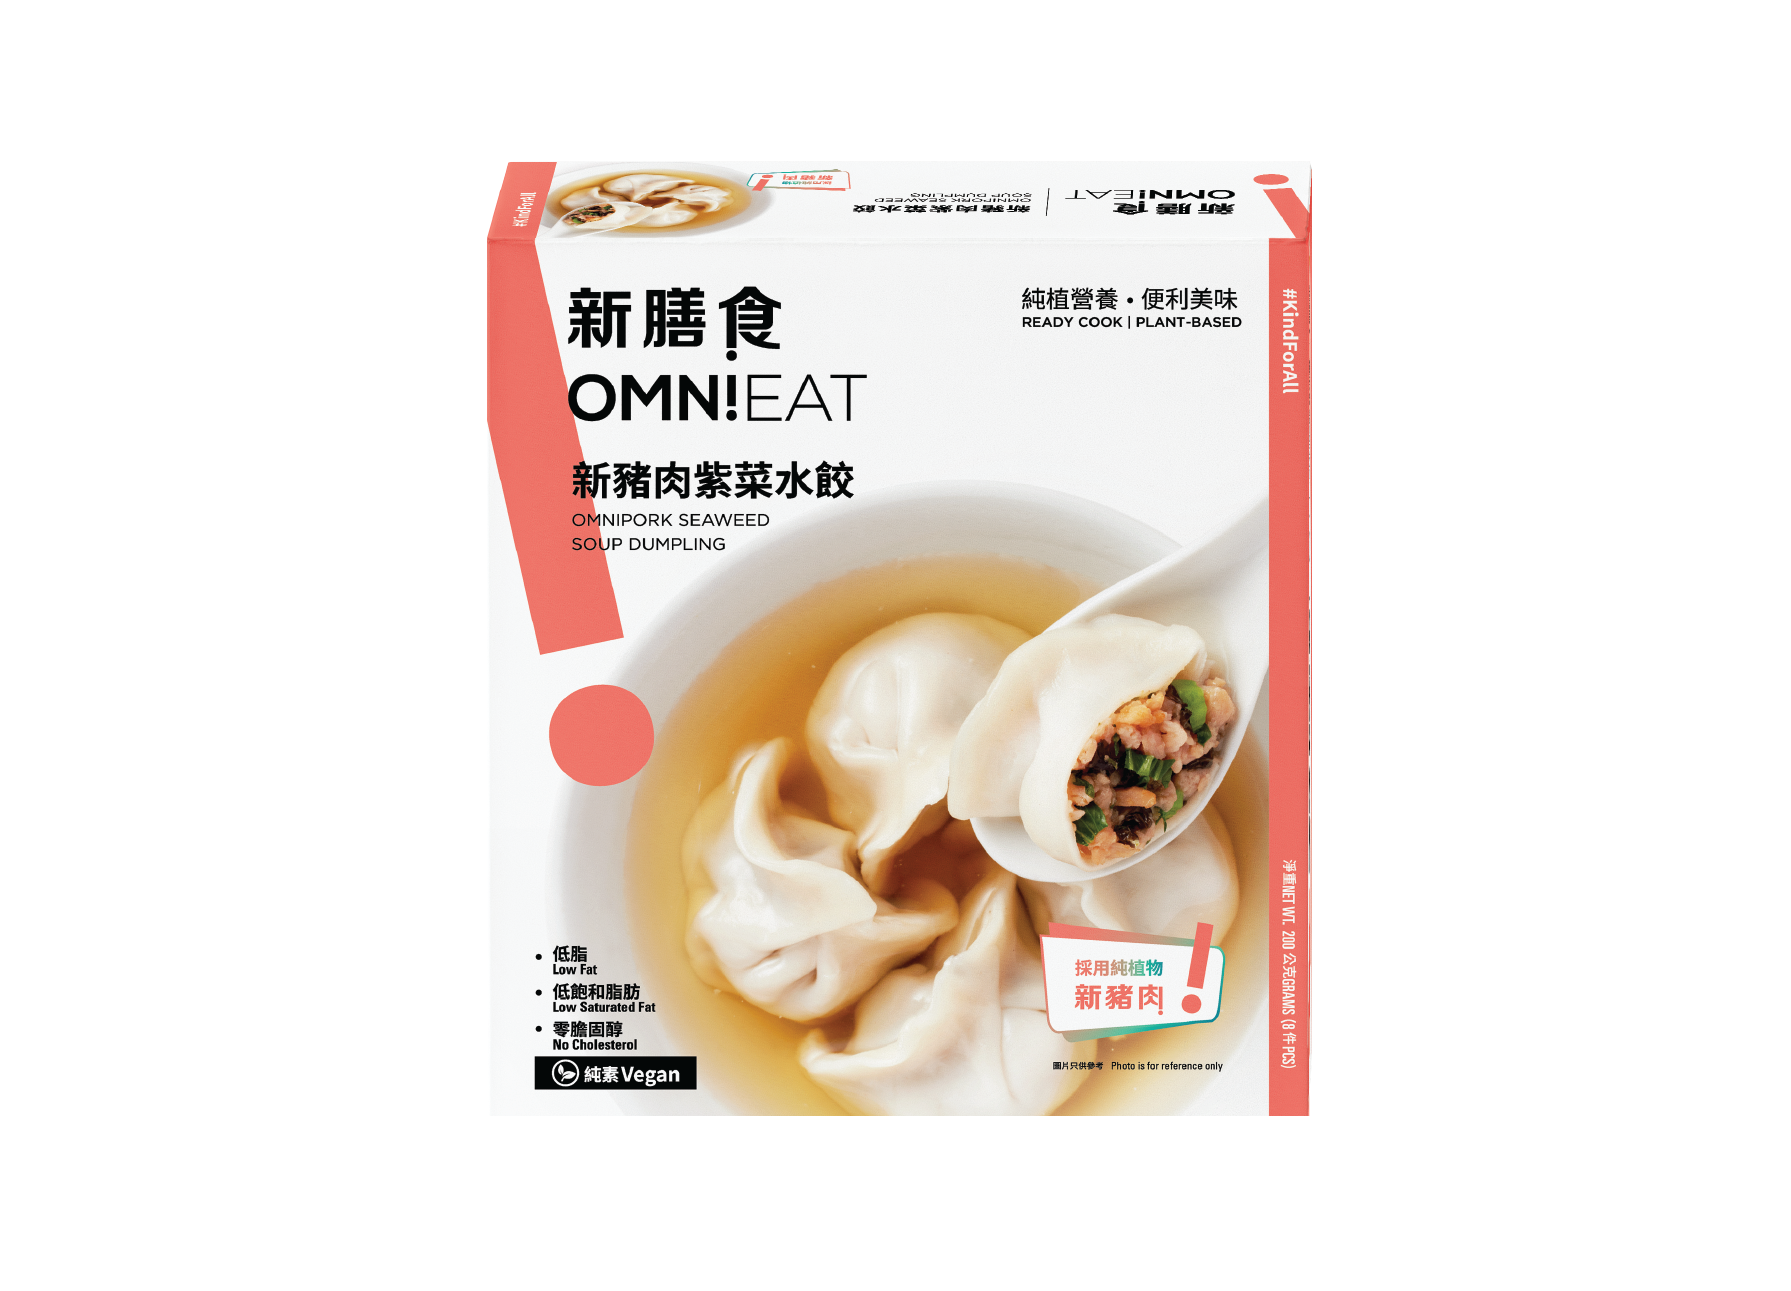 OmniPork seaweed soup dumpling (for Taiwan market)